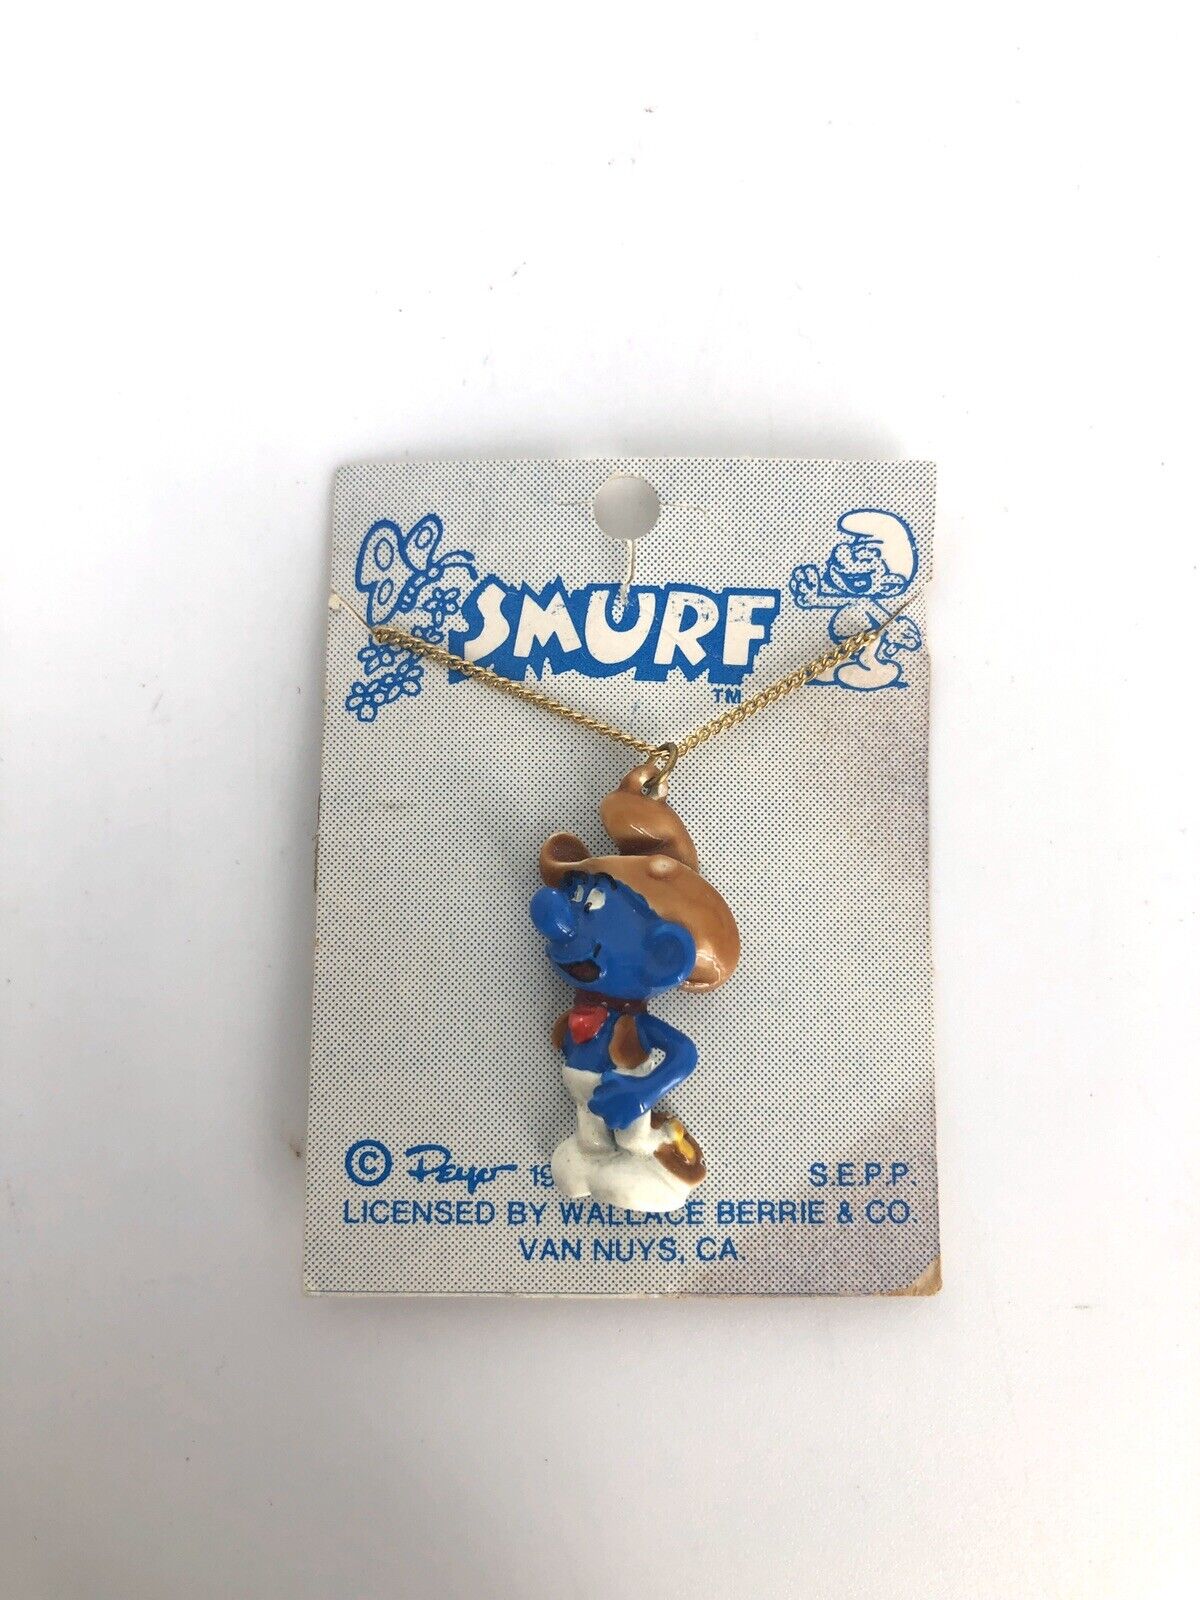 Vintage PEYO Smurf Cowboy Necklace Pendant Chain Collectible 1981 Painted Enamel